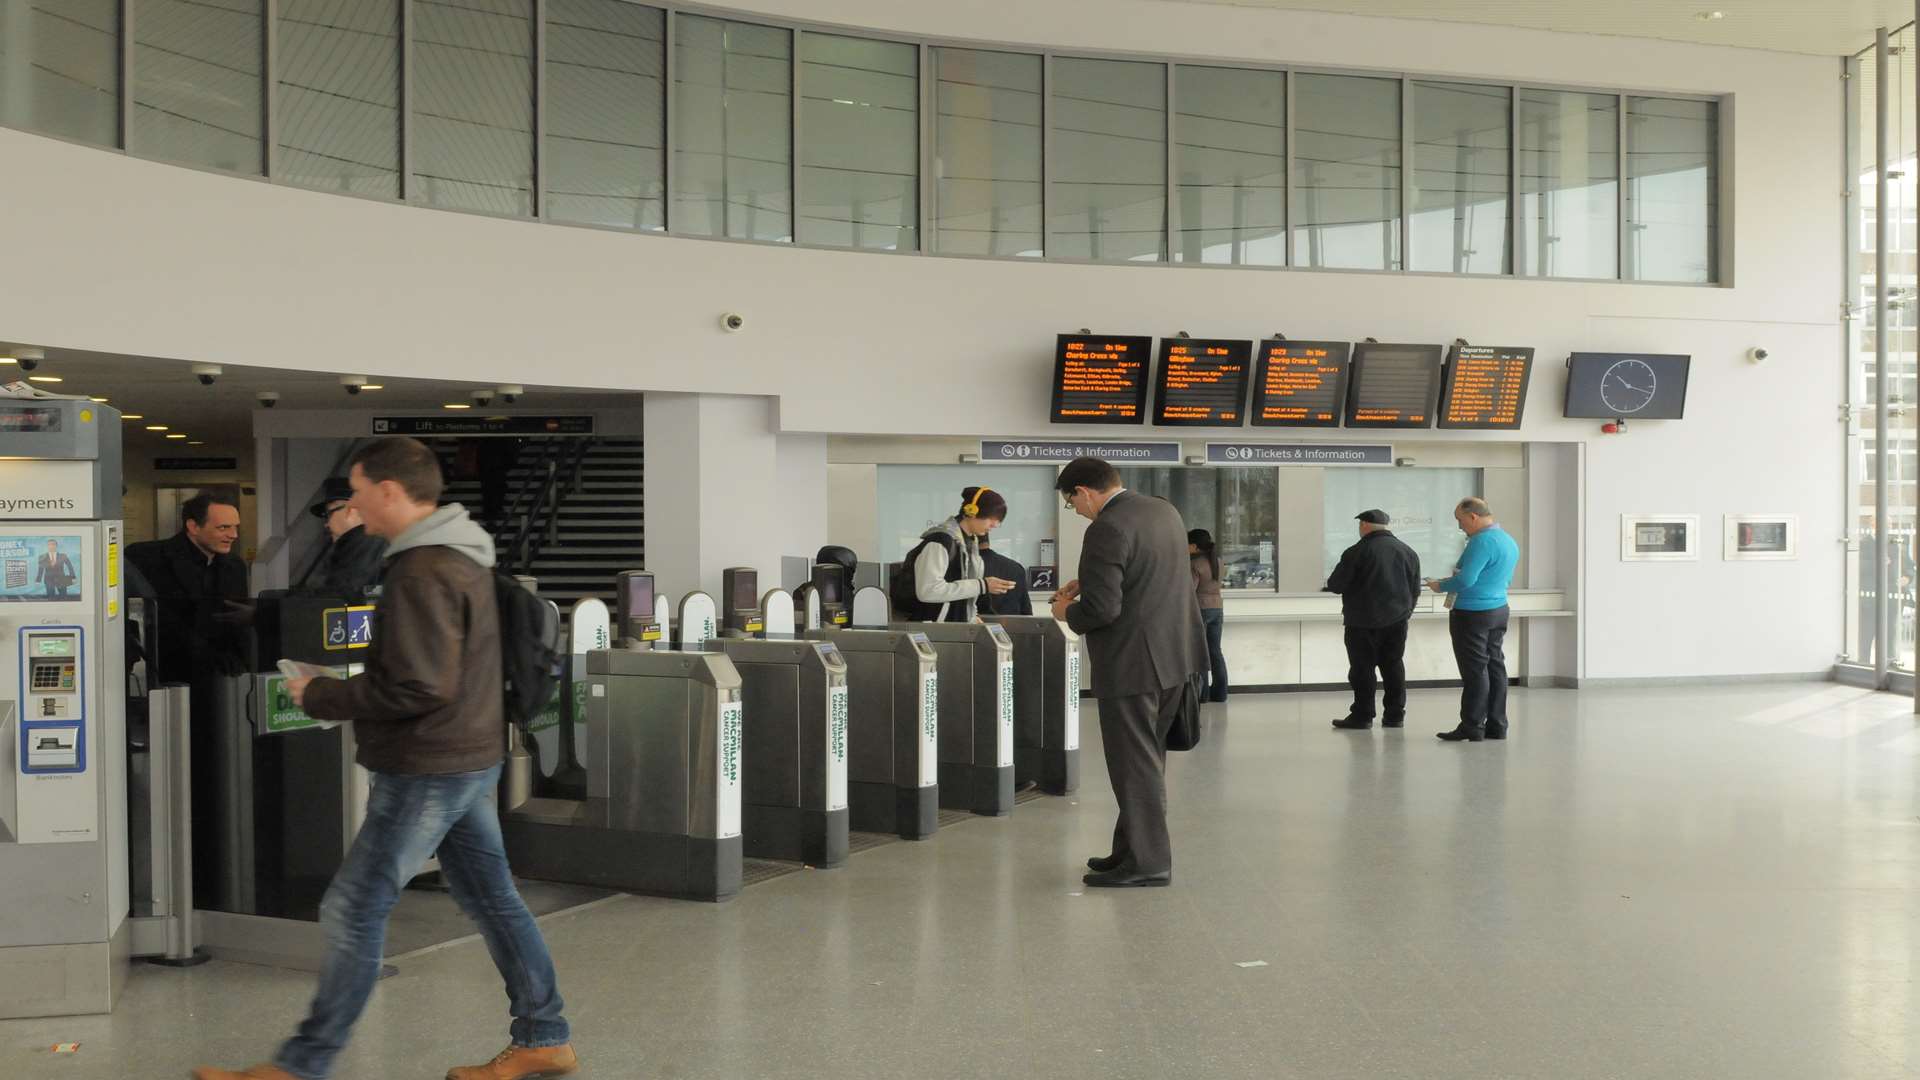 Dartford railway station's capacity will come under pressure. Picture: Steve Crispe